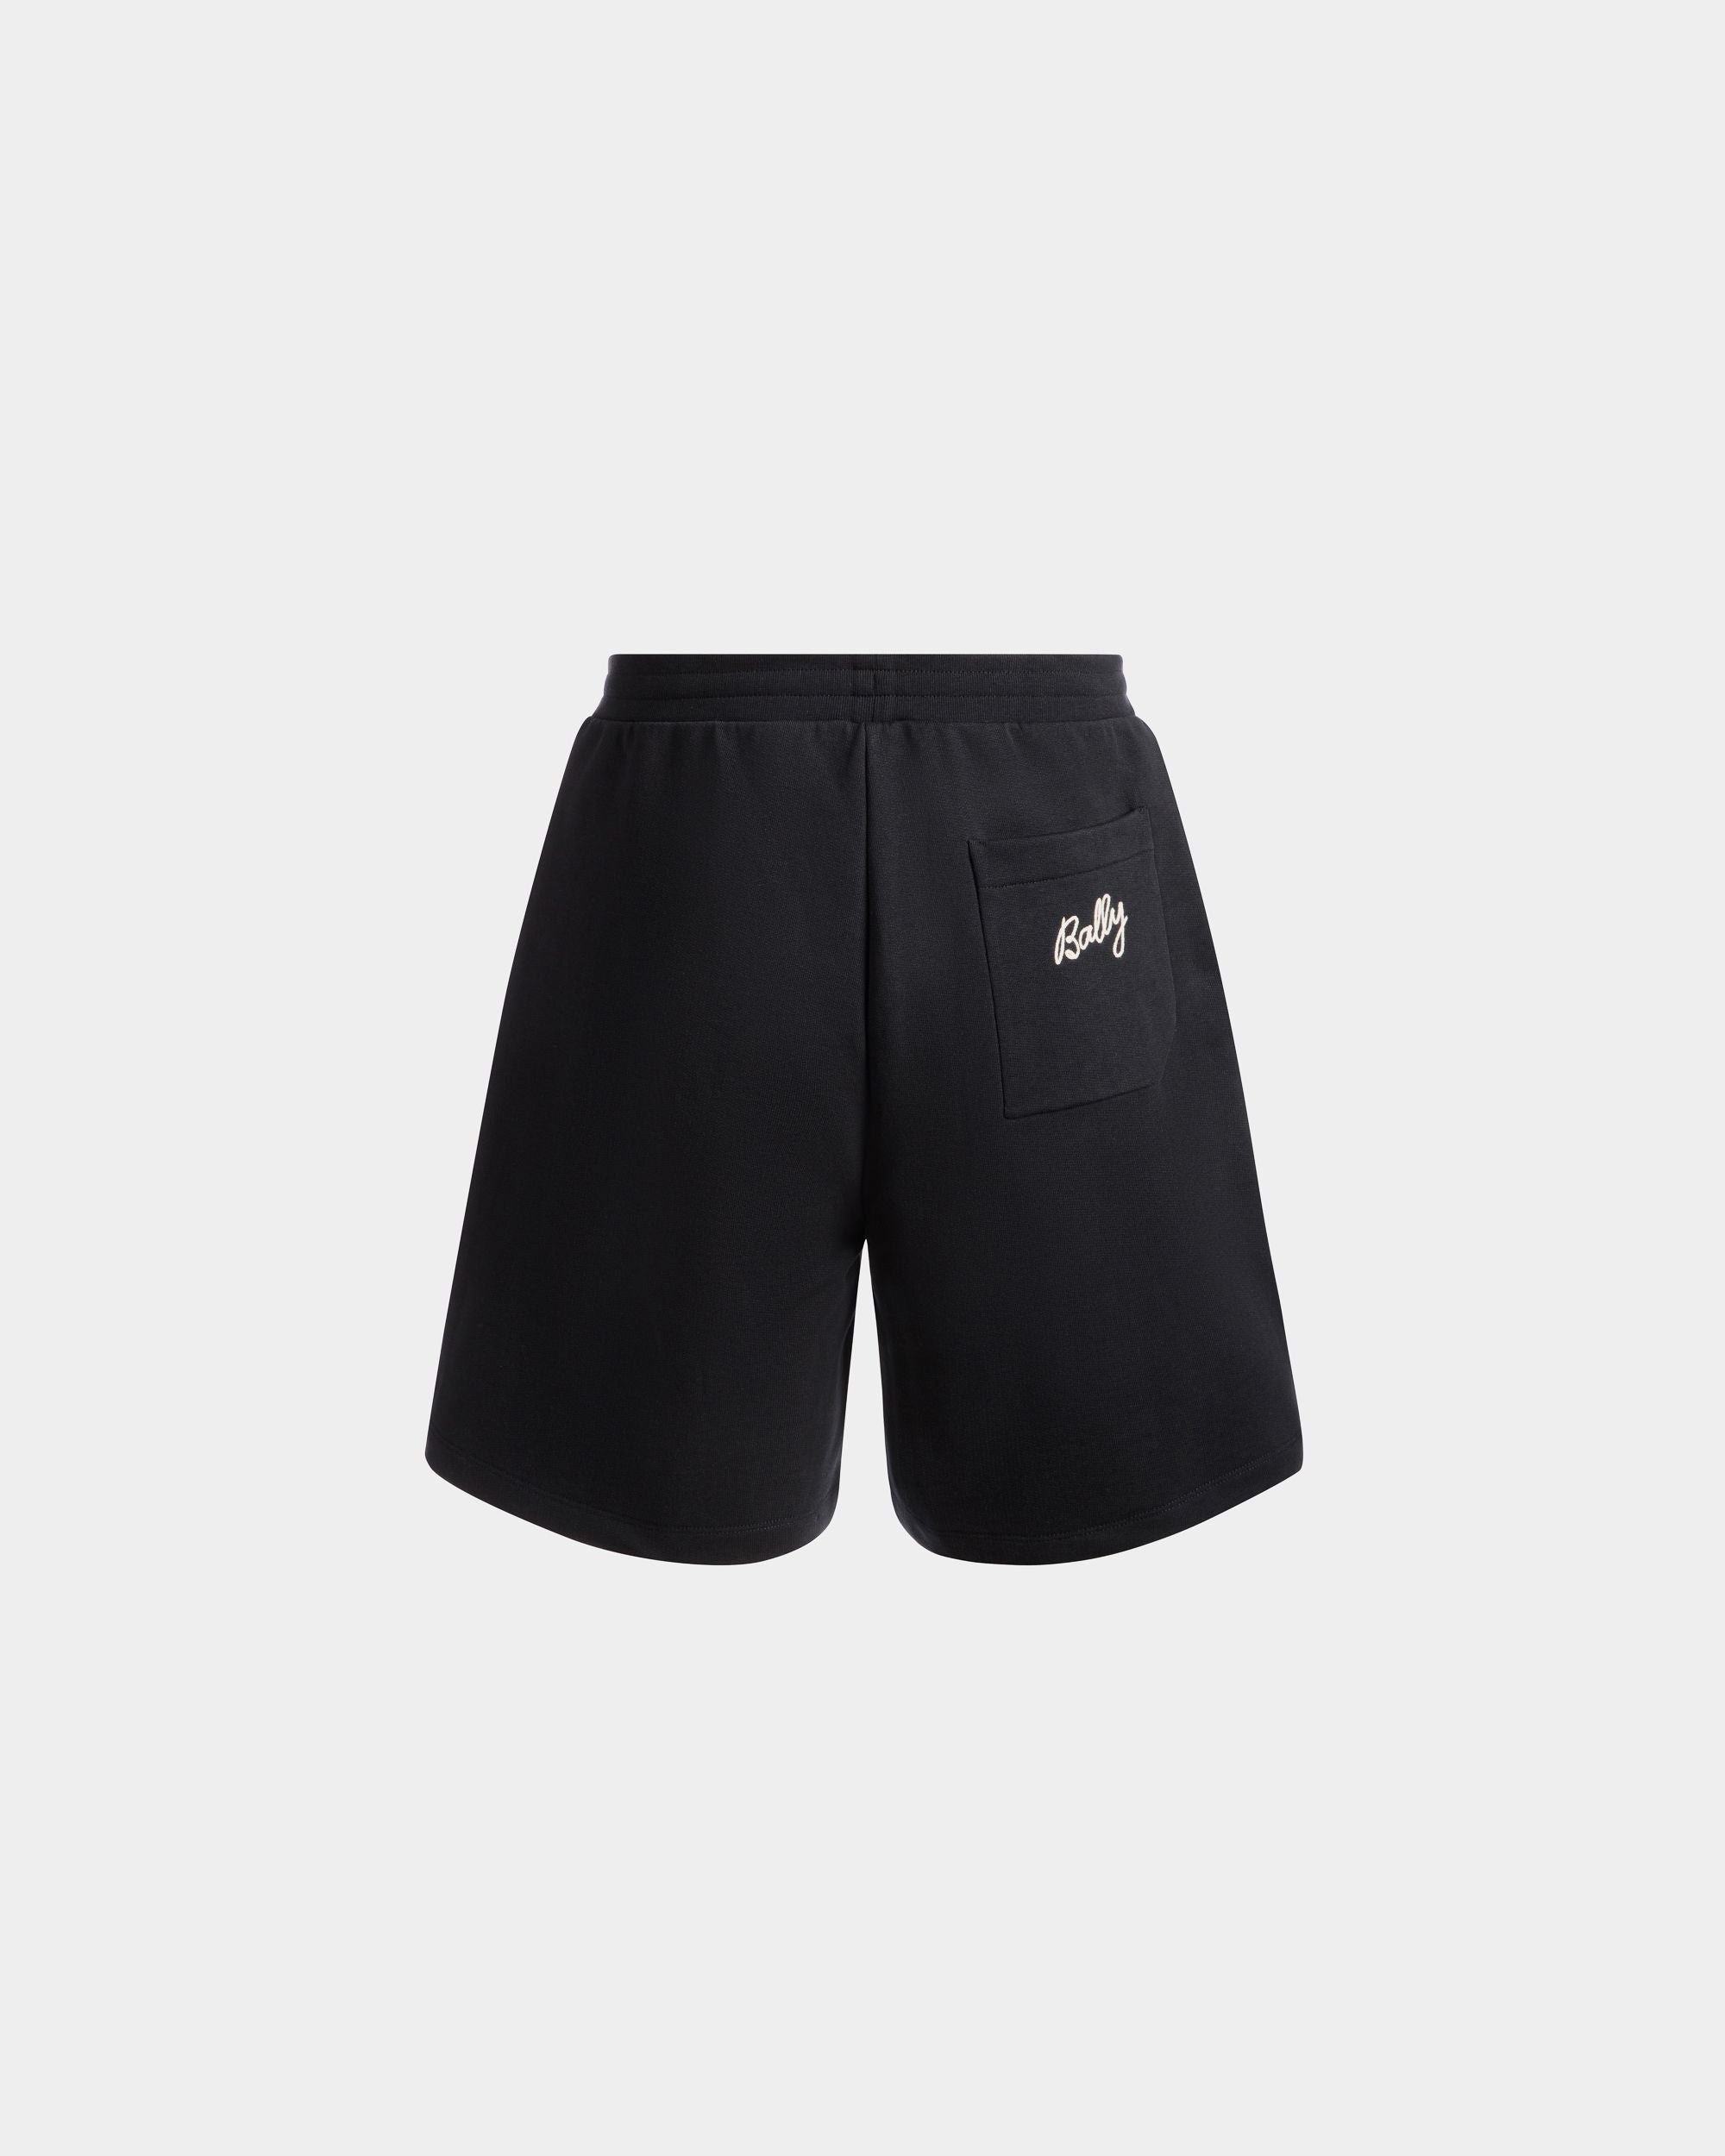 Men's Sweat shorts in Navy Blue Cotton | Bally | Still Life Back